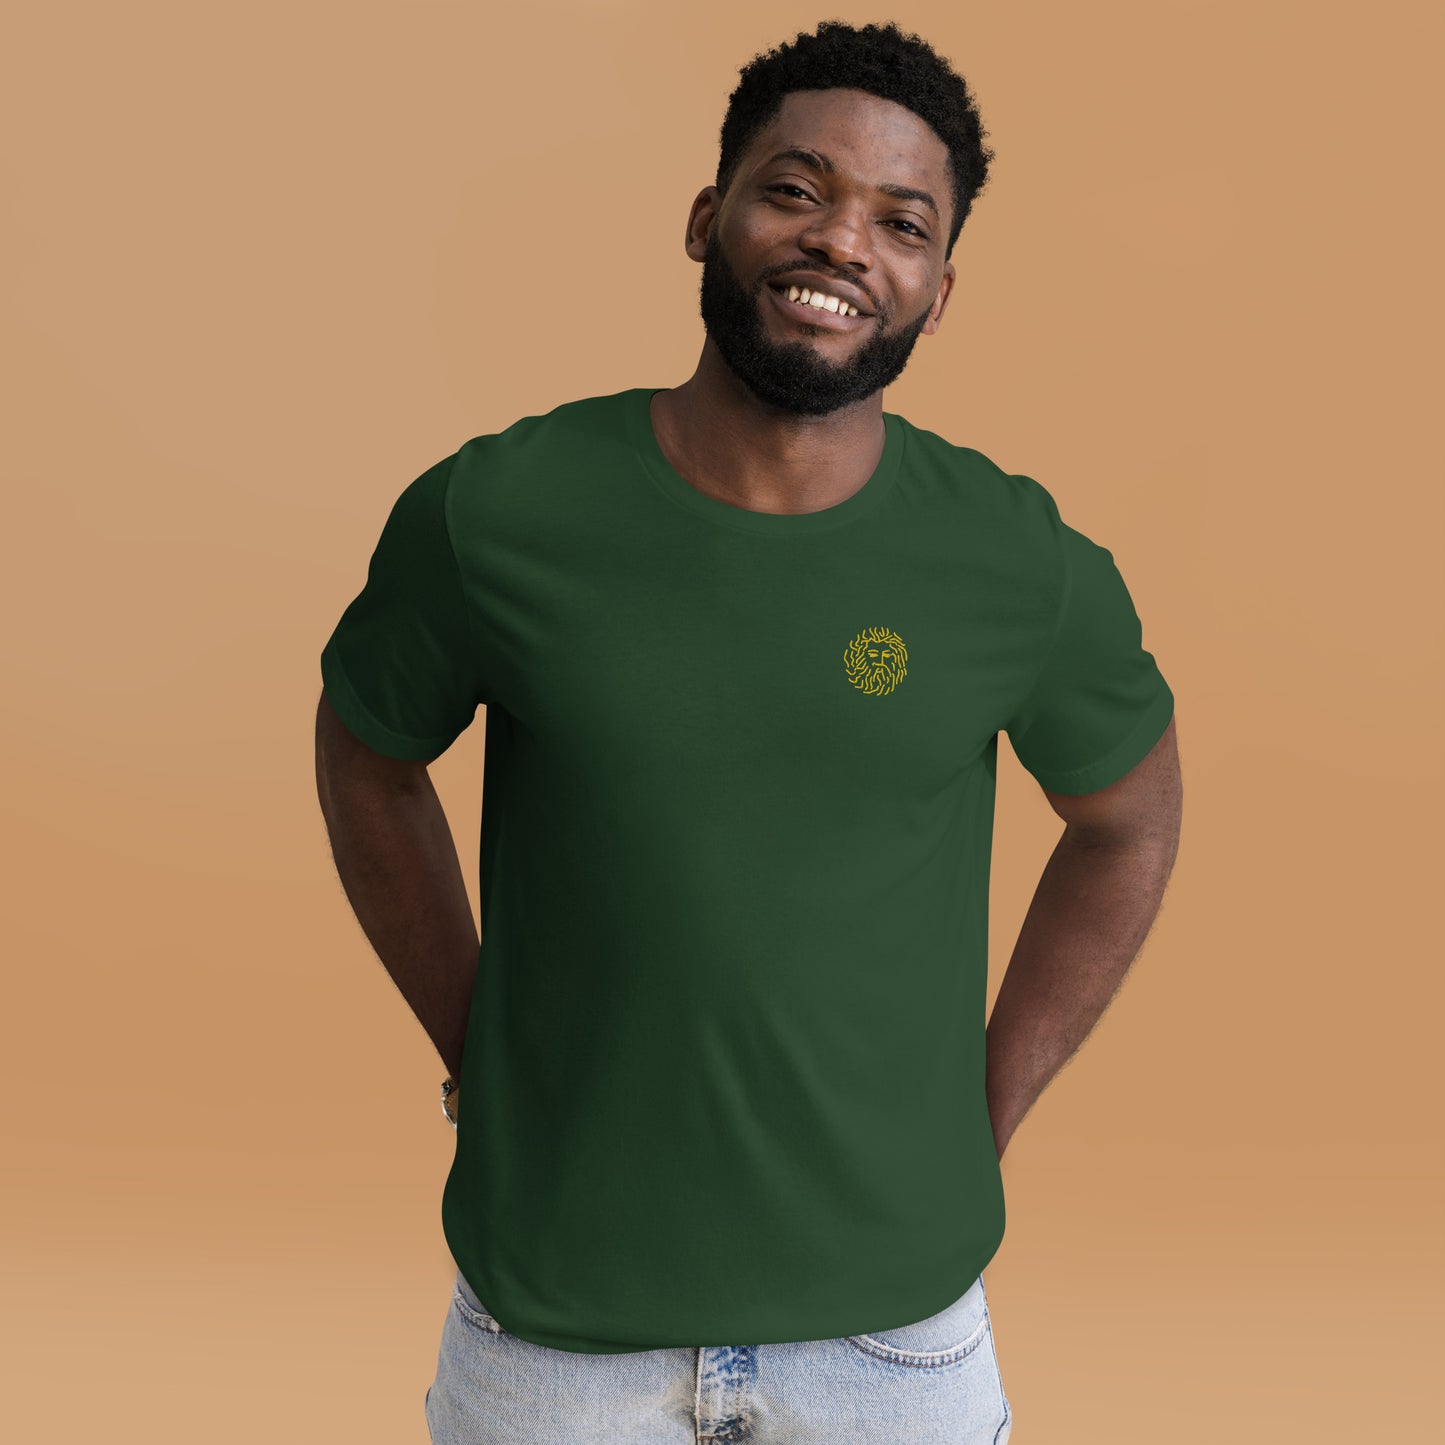 Man wearing NOMADA Poseidon Beard Embroidered T-shirt, Forest Green color shirt